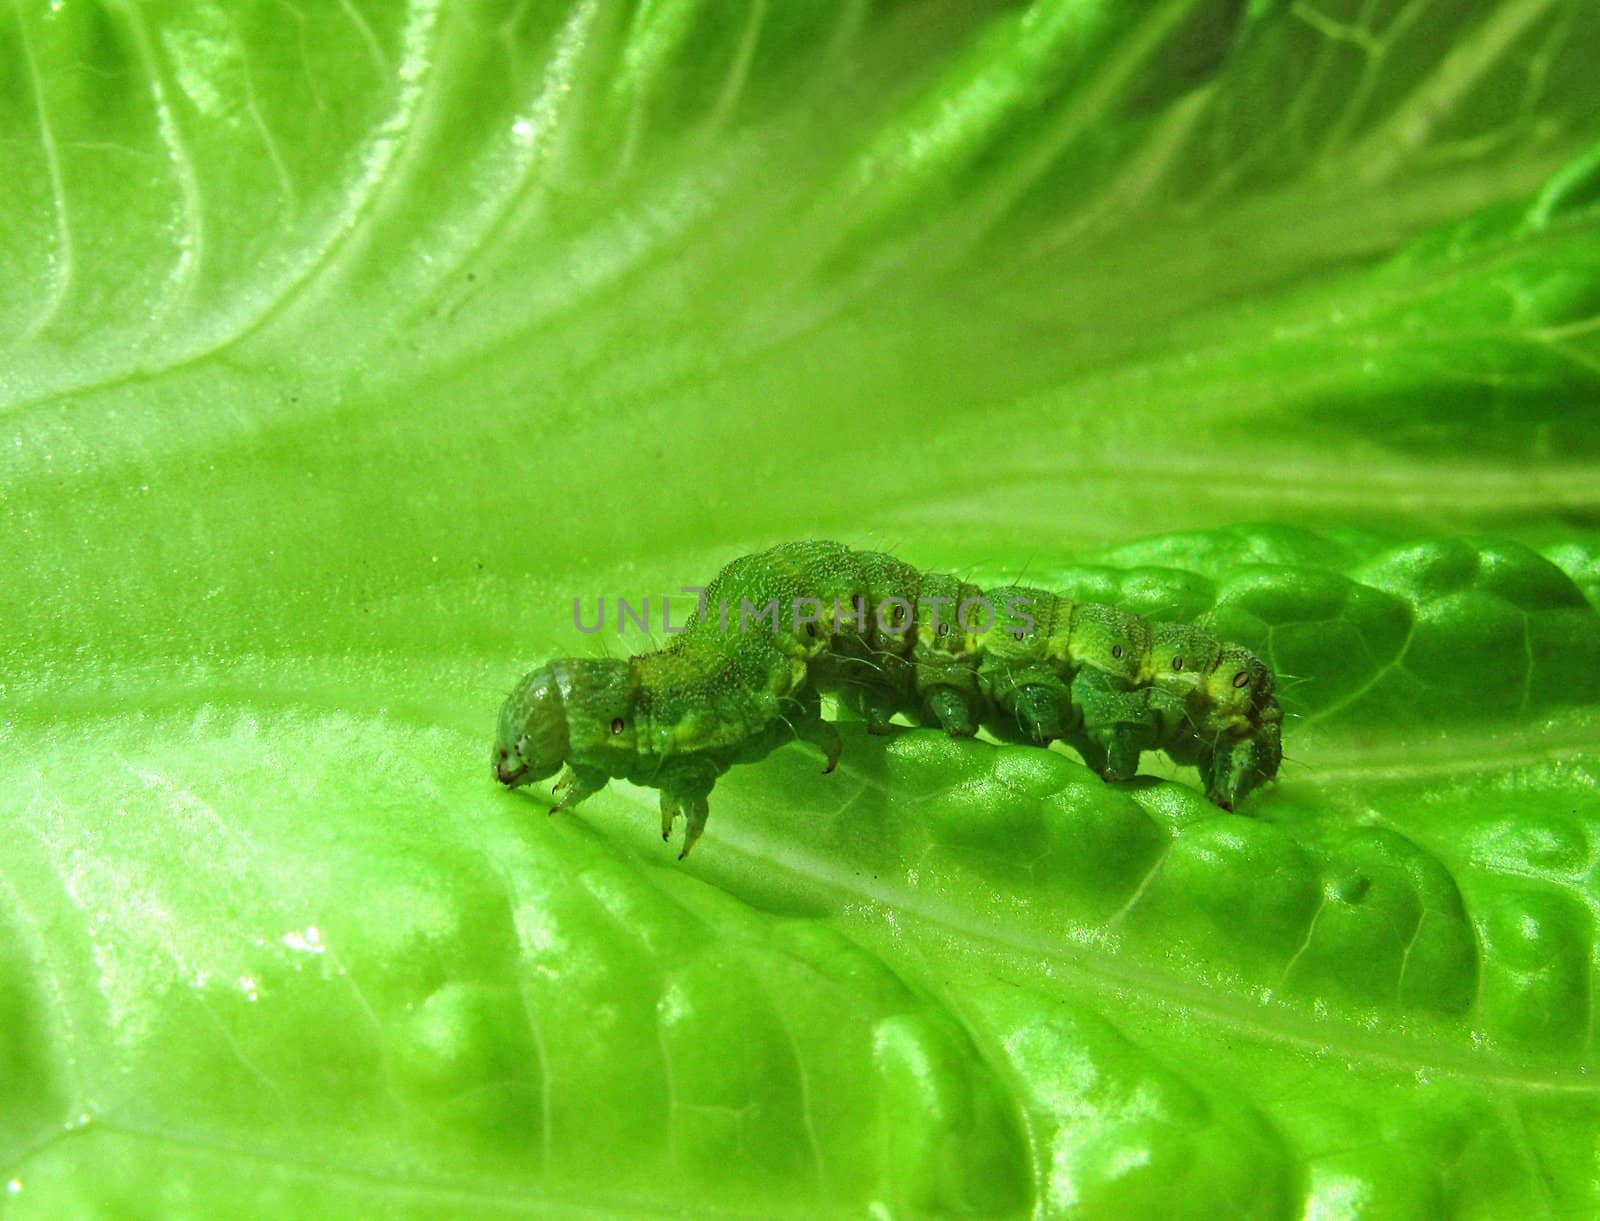 caterpillar on leaf by romantiche